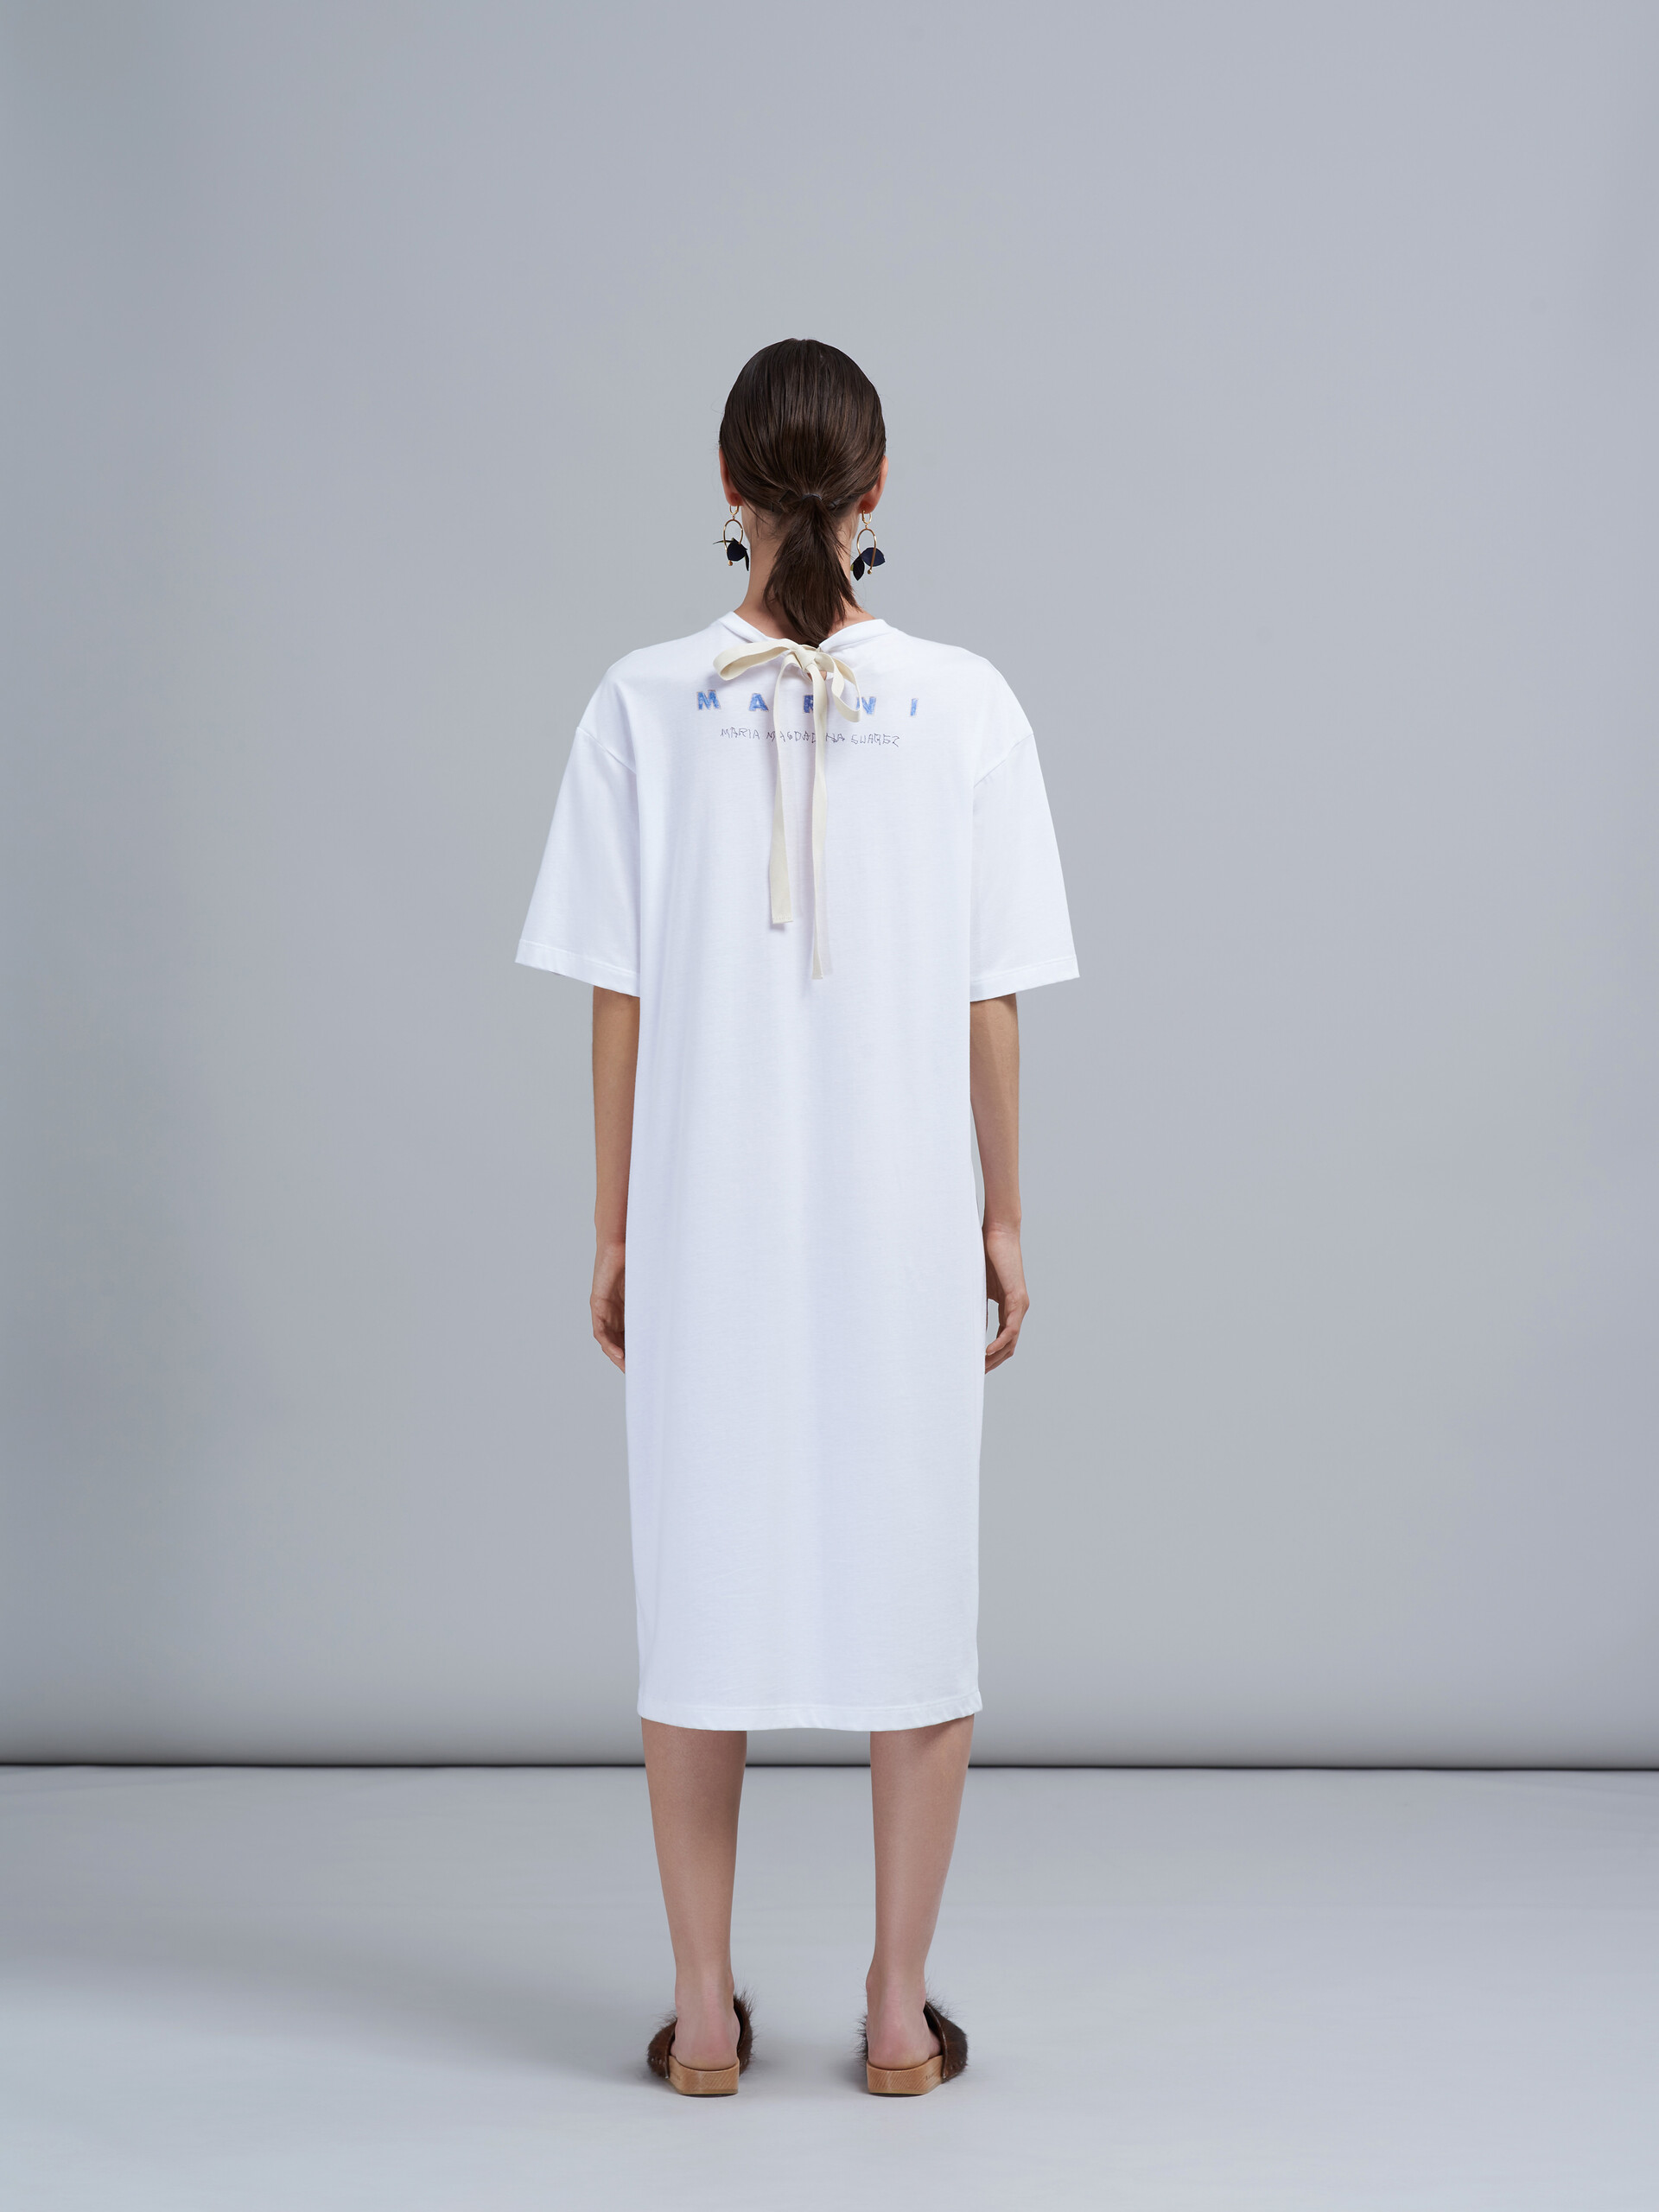 La Rosa print cotton jersey dress - Dresses - Image 3